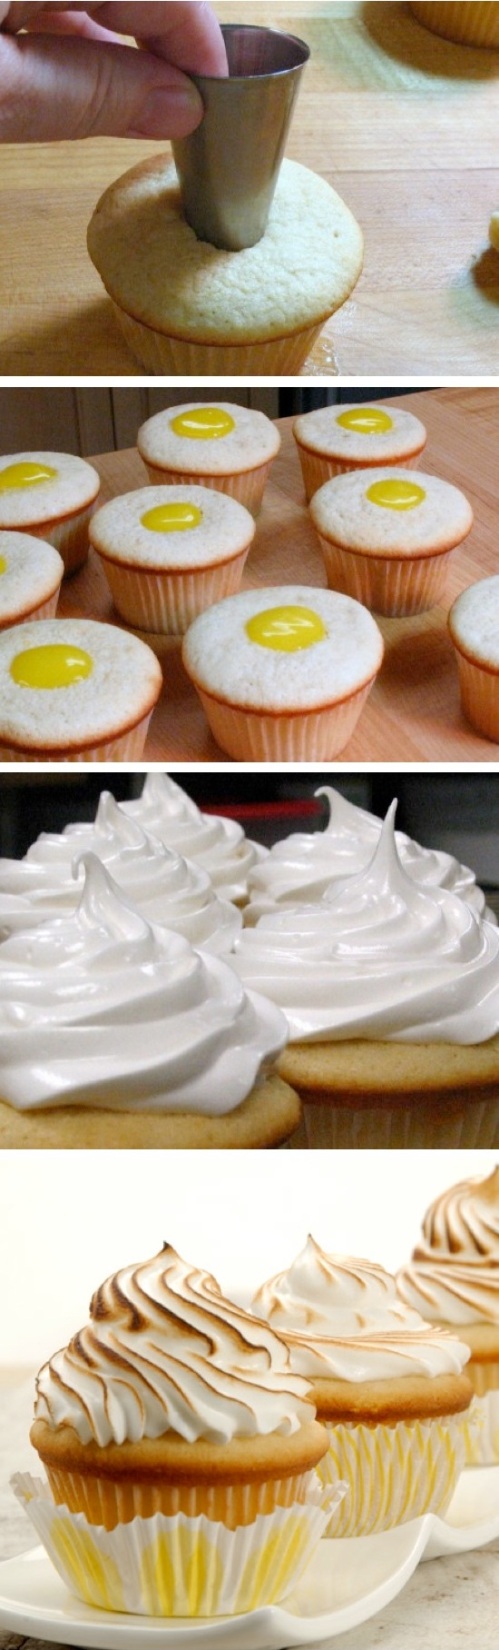 Awesome-Lemon-Meringue-Cupcakes-Recipe-By-Cupcakepedia, cupcakes, food, dessert, cupcake, lemon, fruit, yellow, white